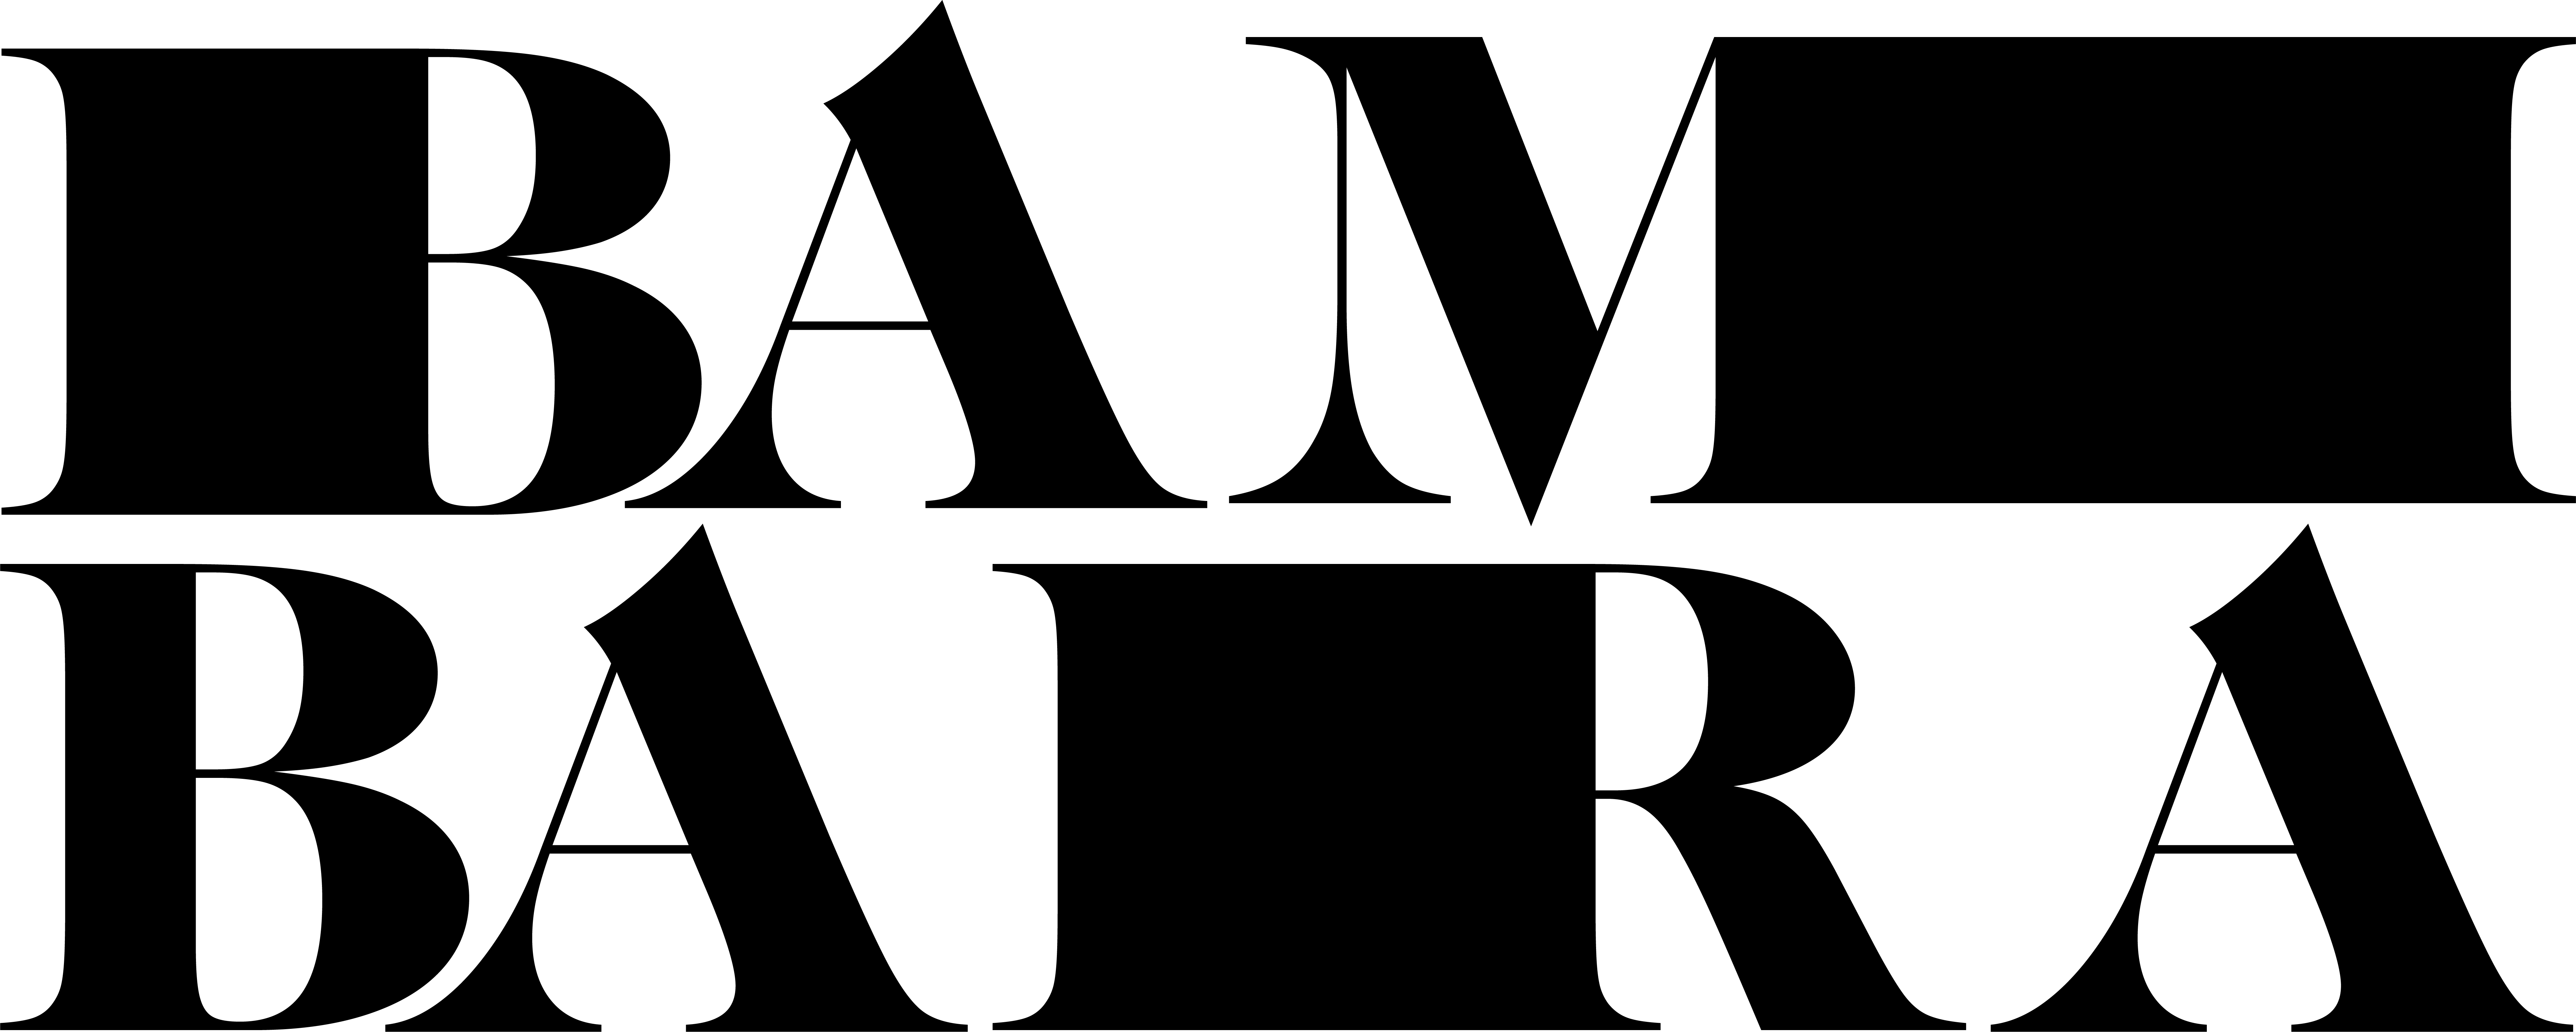 Bambara logo